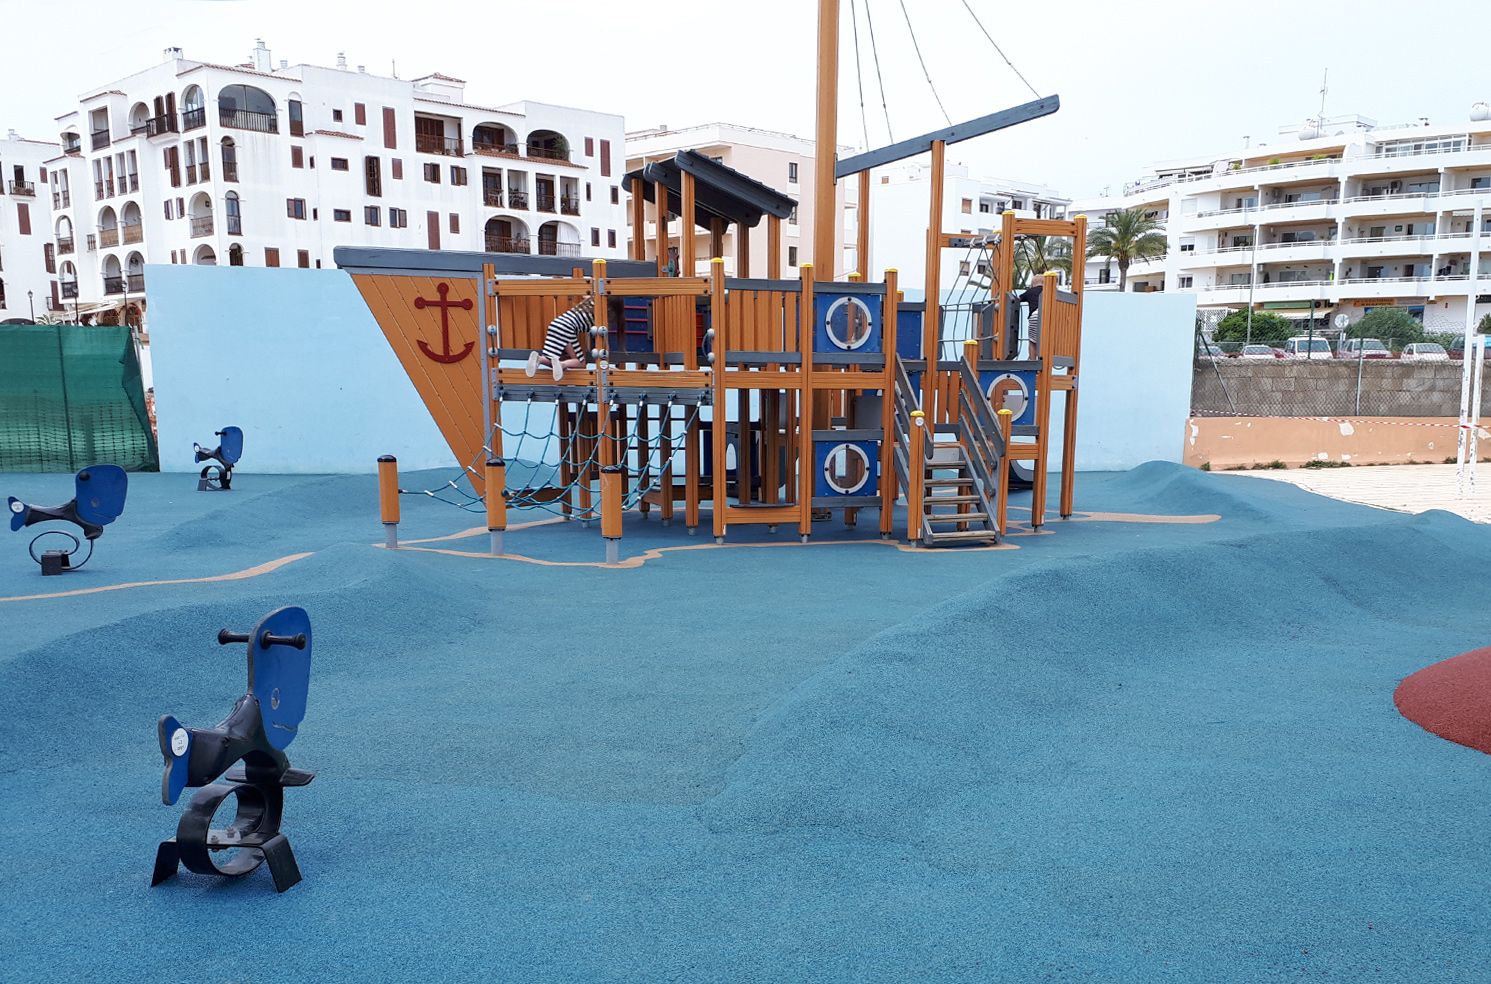 Los Piratas municipal children’s playground